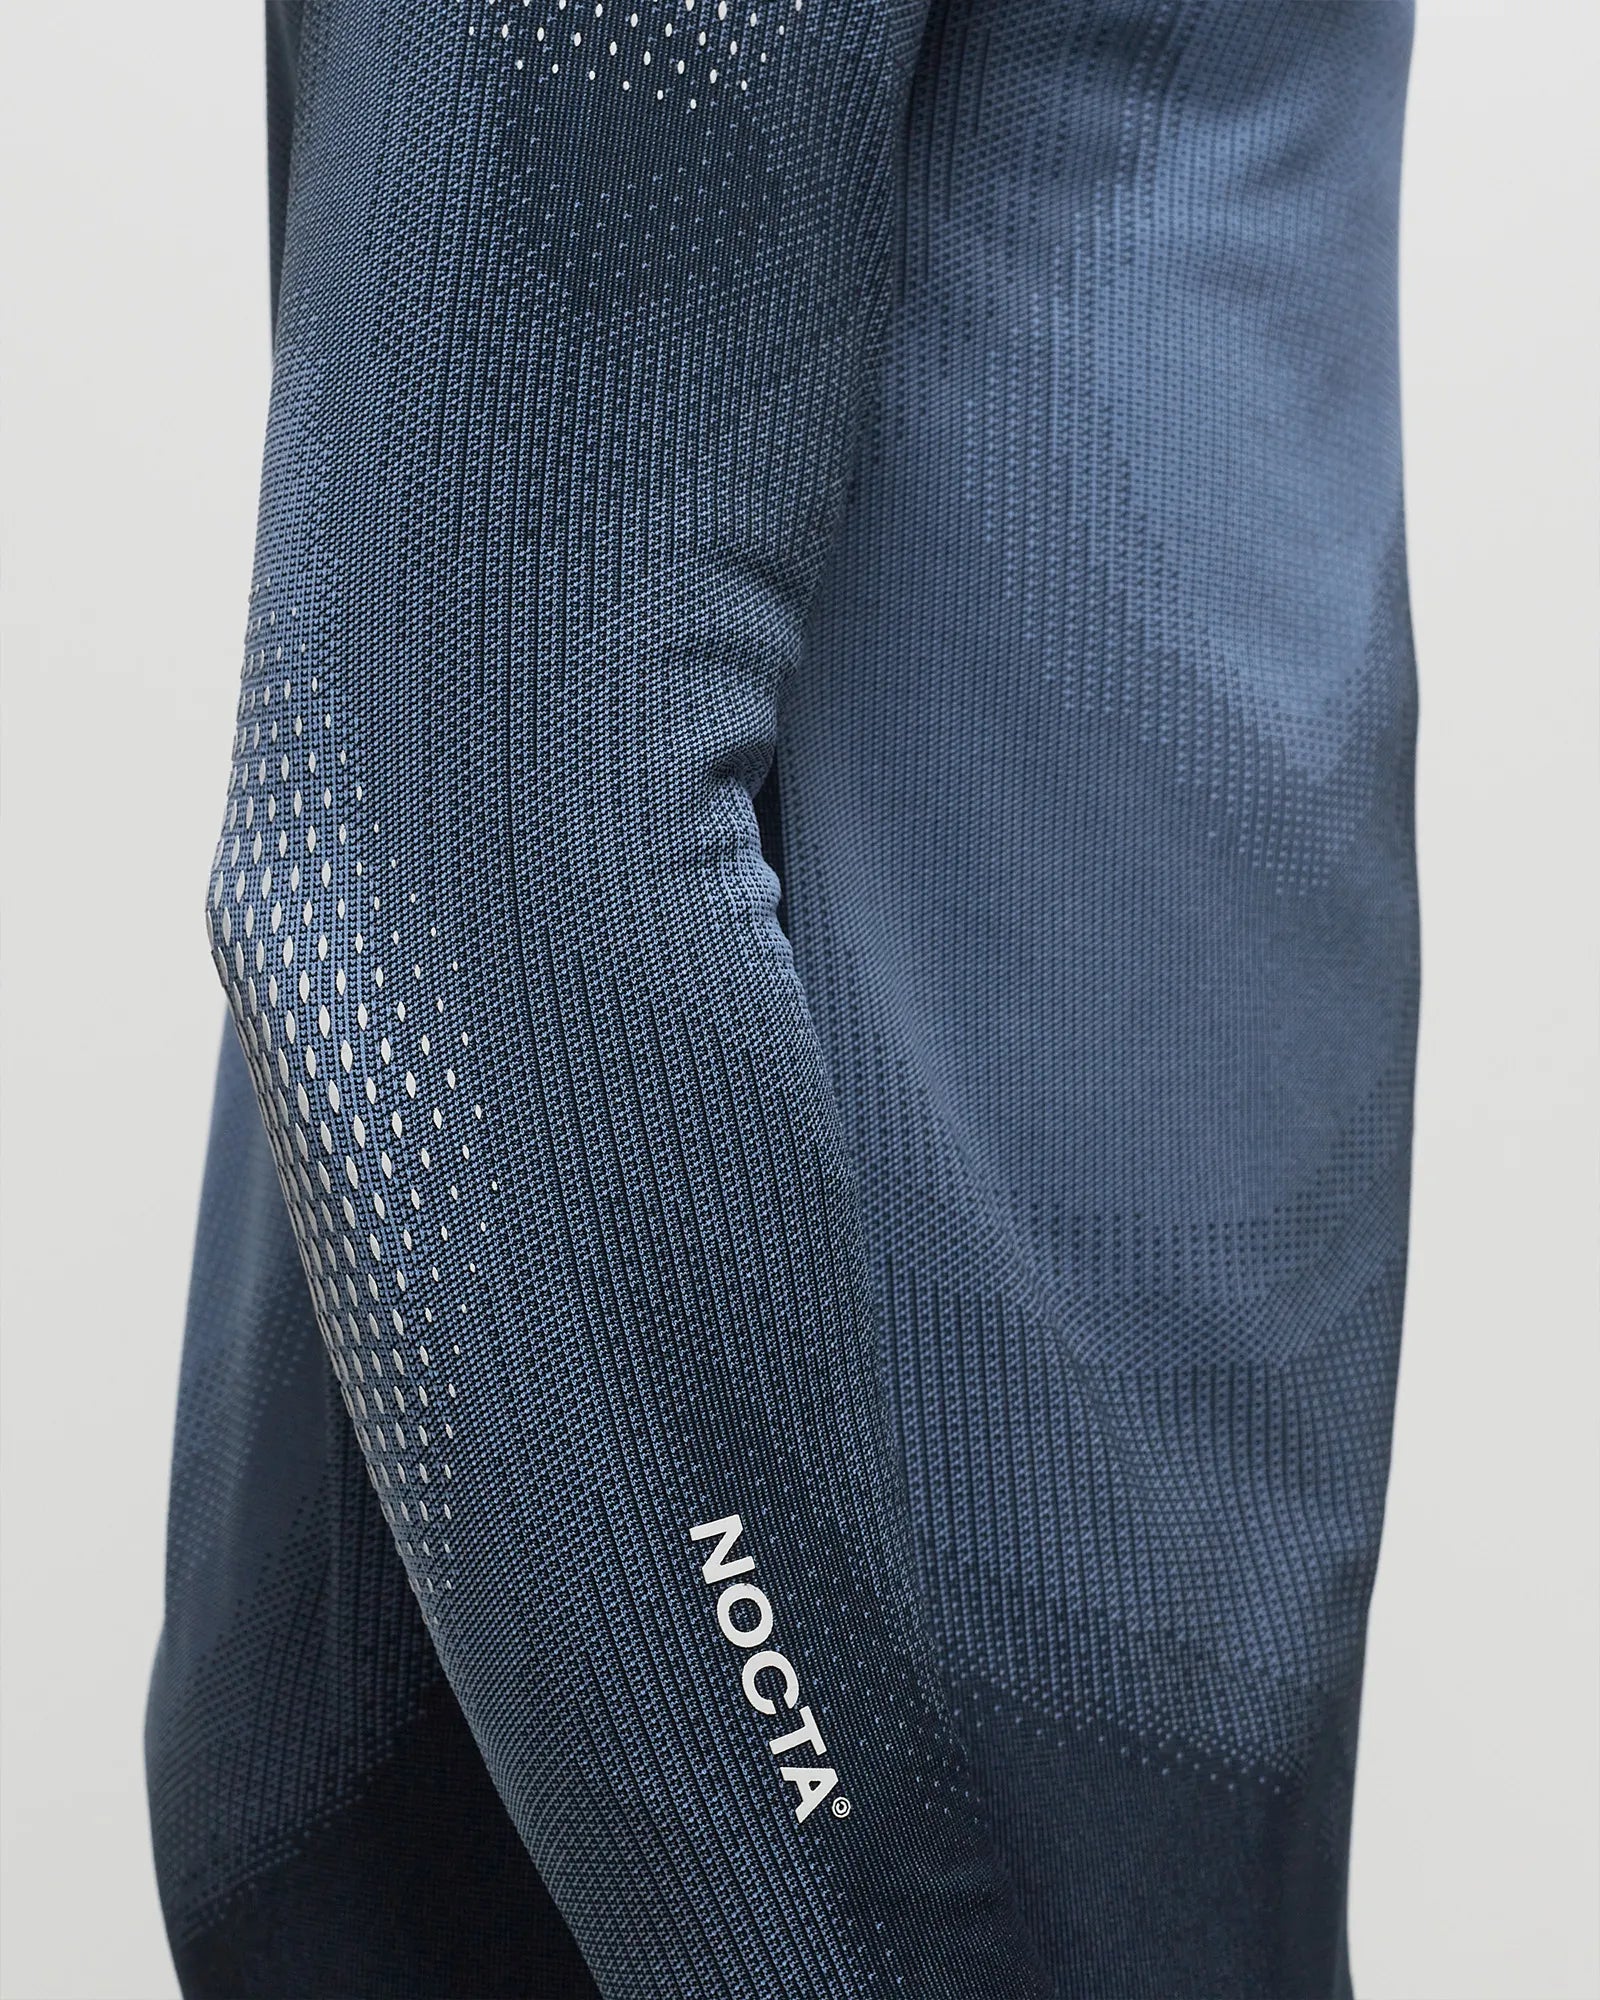 Nike x NOCTA NRG Knit Long Sleeve Top Cobalt Bliss/Dark Obsidian